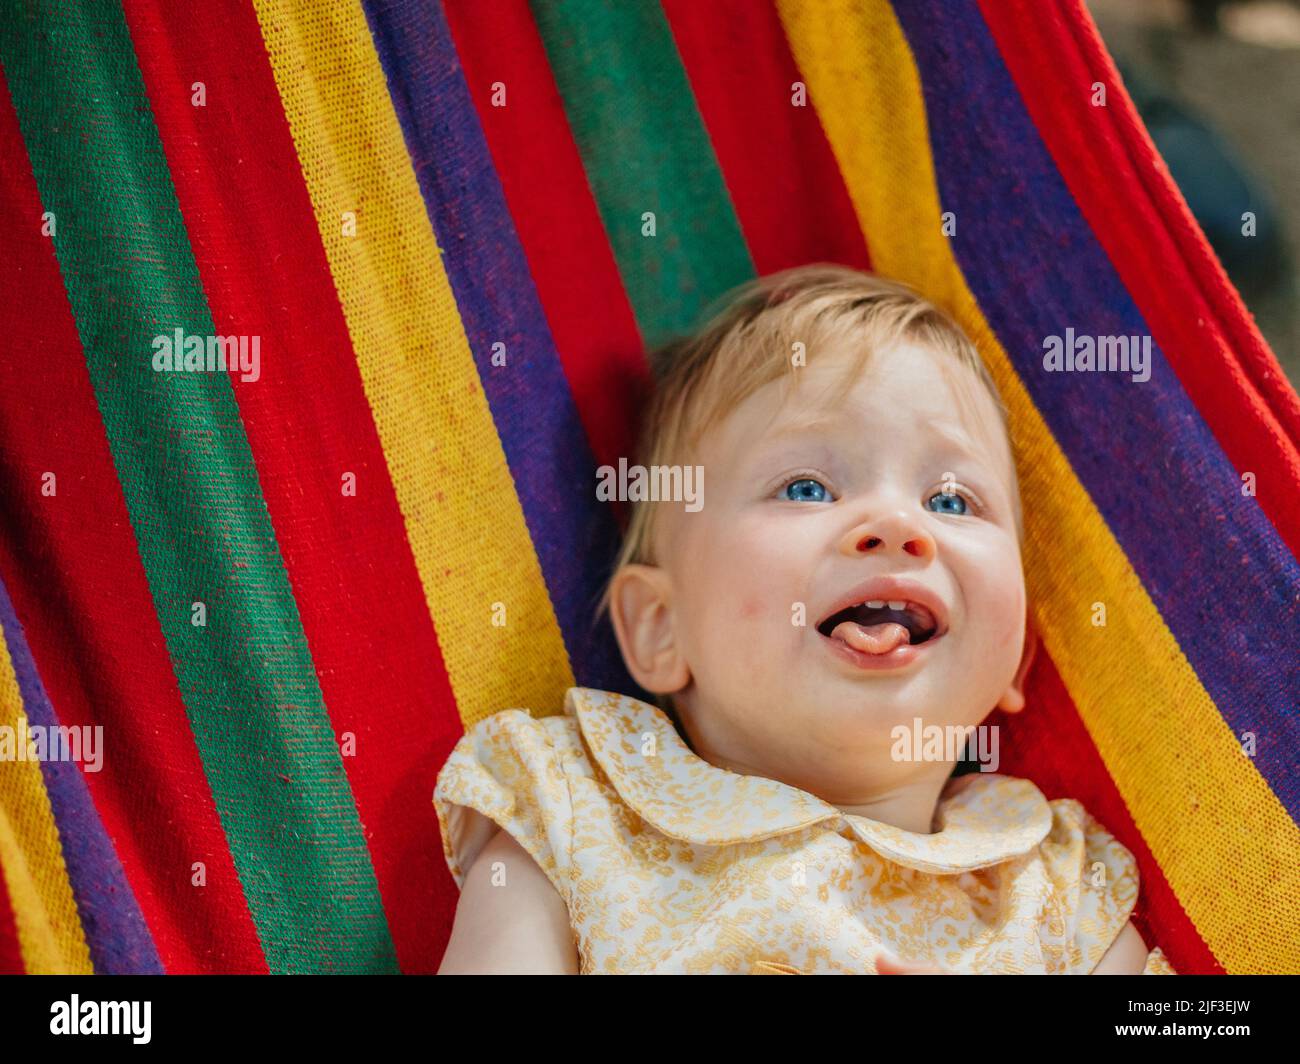 Child in a rainbow hammock Stock Photo